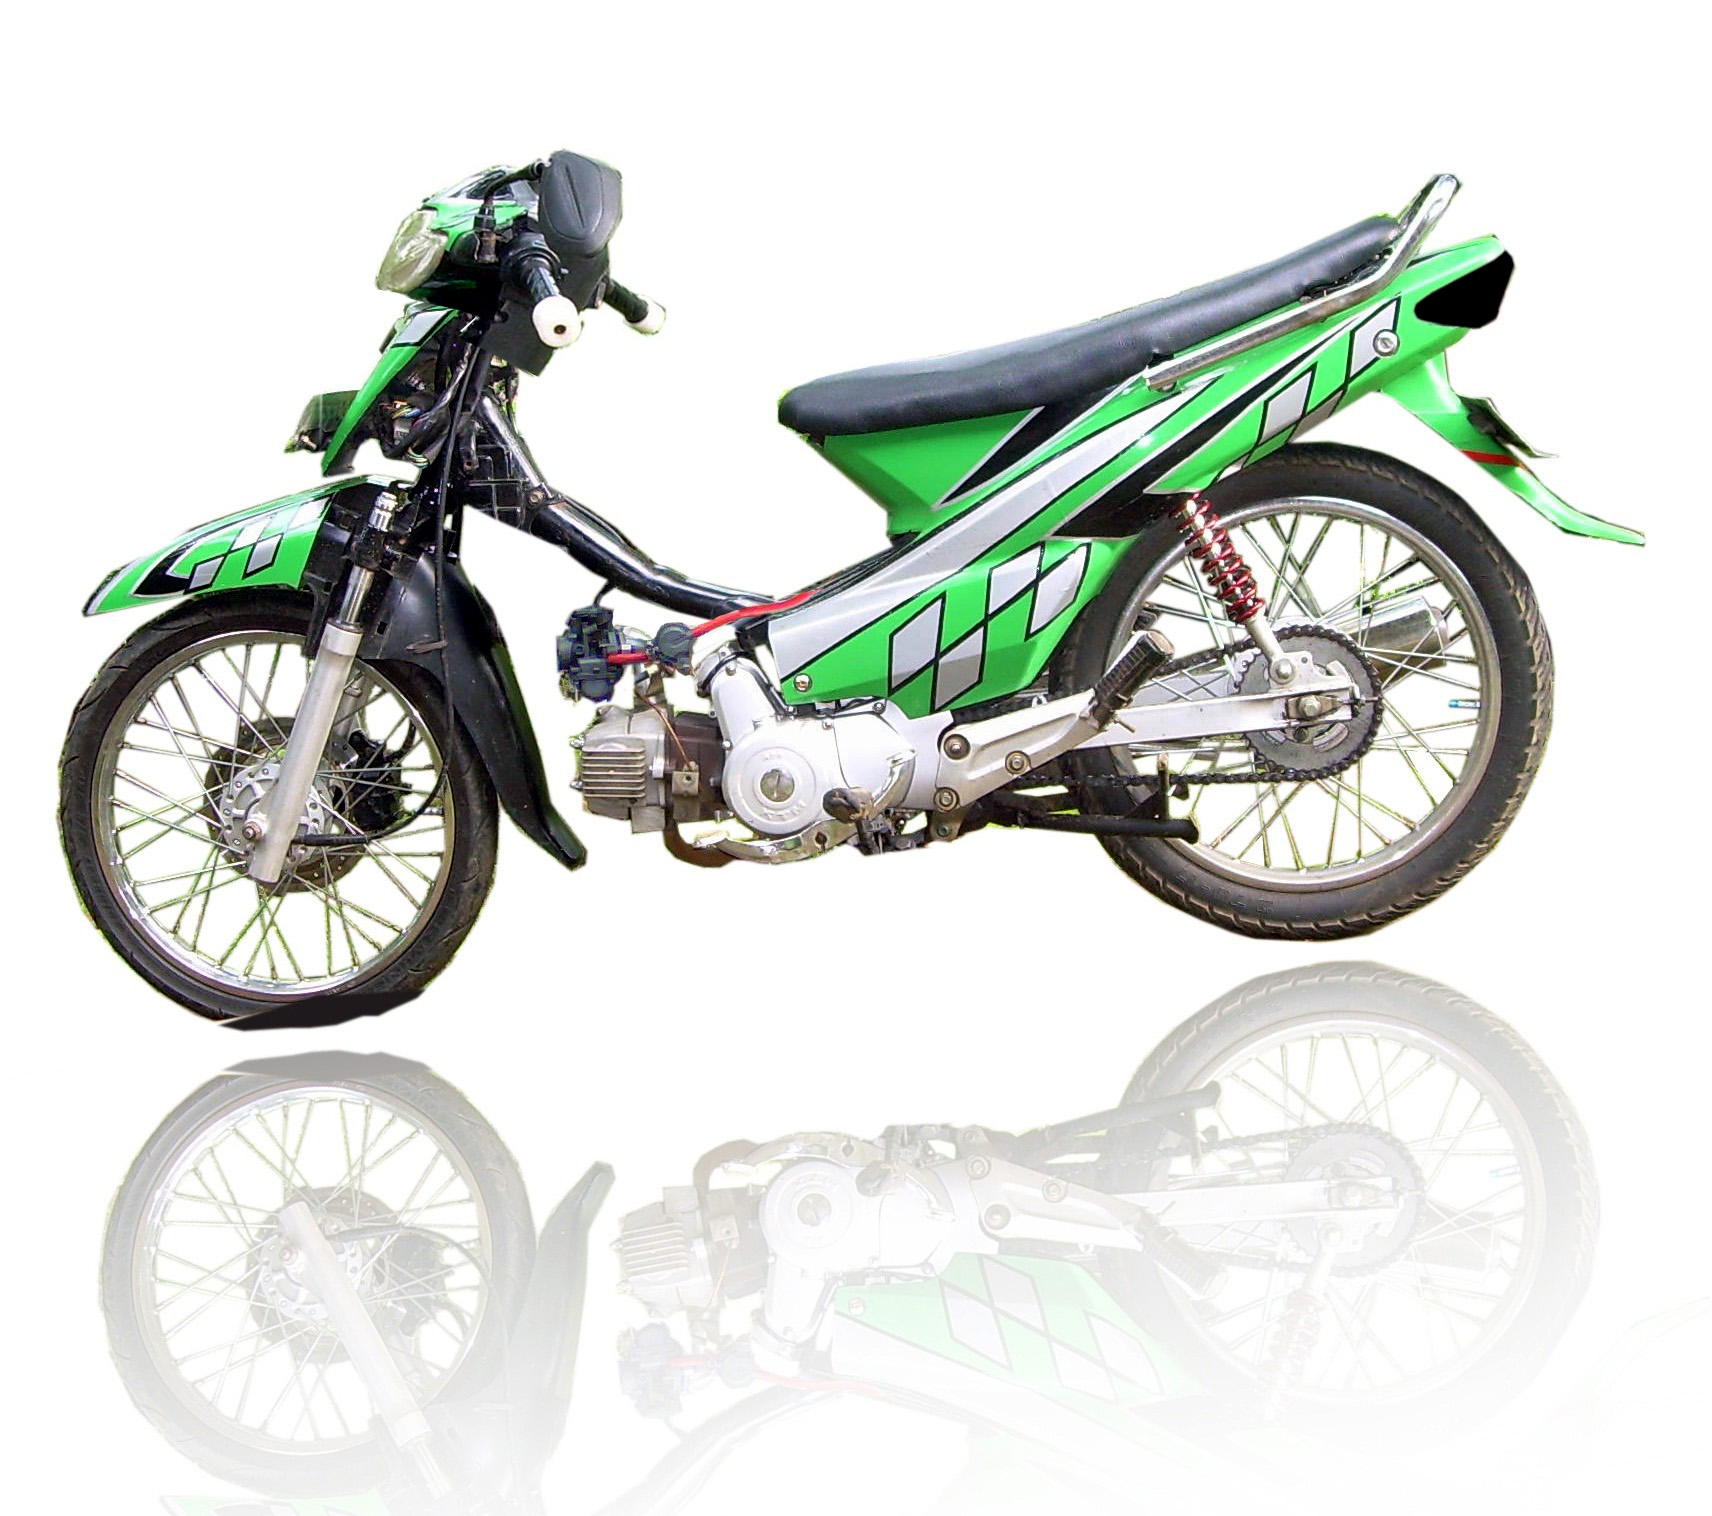 Modifikasi Supra Fit Modifikasi Motor Kawasaki Honda Yamaha